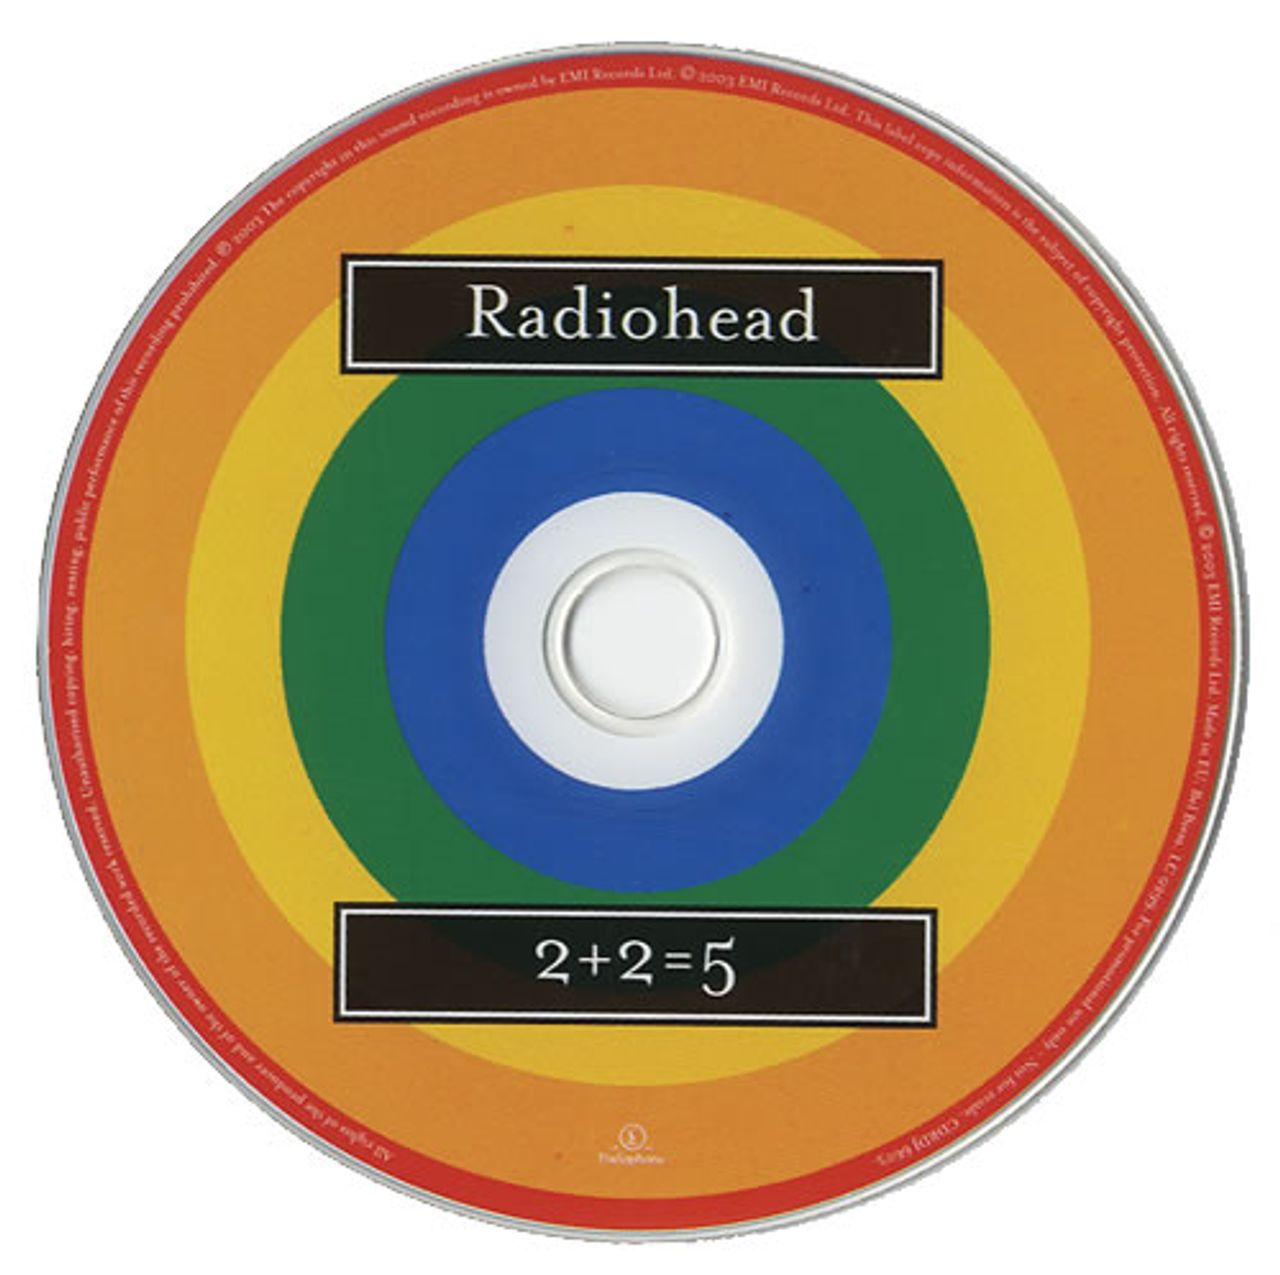 Radiohead 2+2=5 Two+Two=Five European Promo CD single